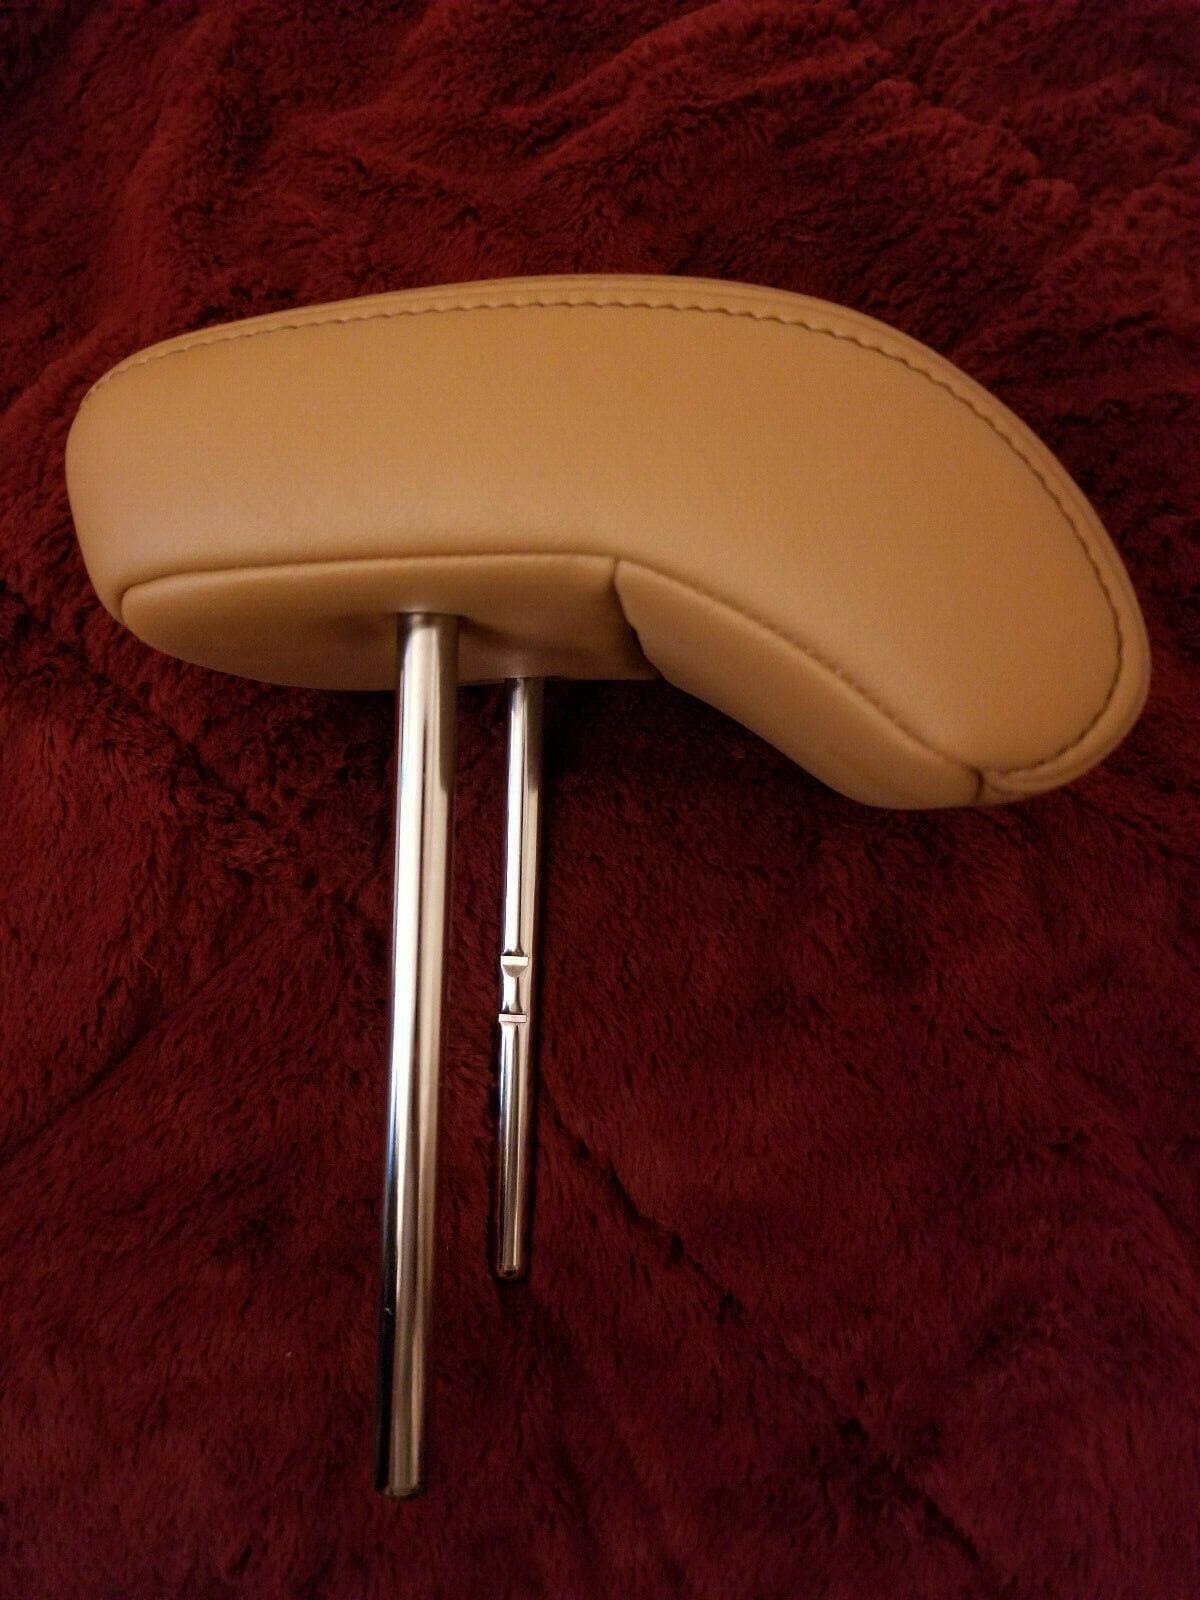 Interior/Upholstery - Used 2013-2020 Lexus GS Rear Center headrest Flaxen 71960-30460-F1 Grade A - Used - Alexandria, VA 22206, United States